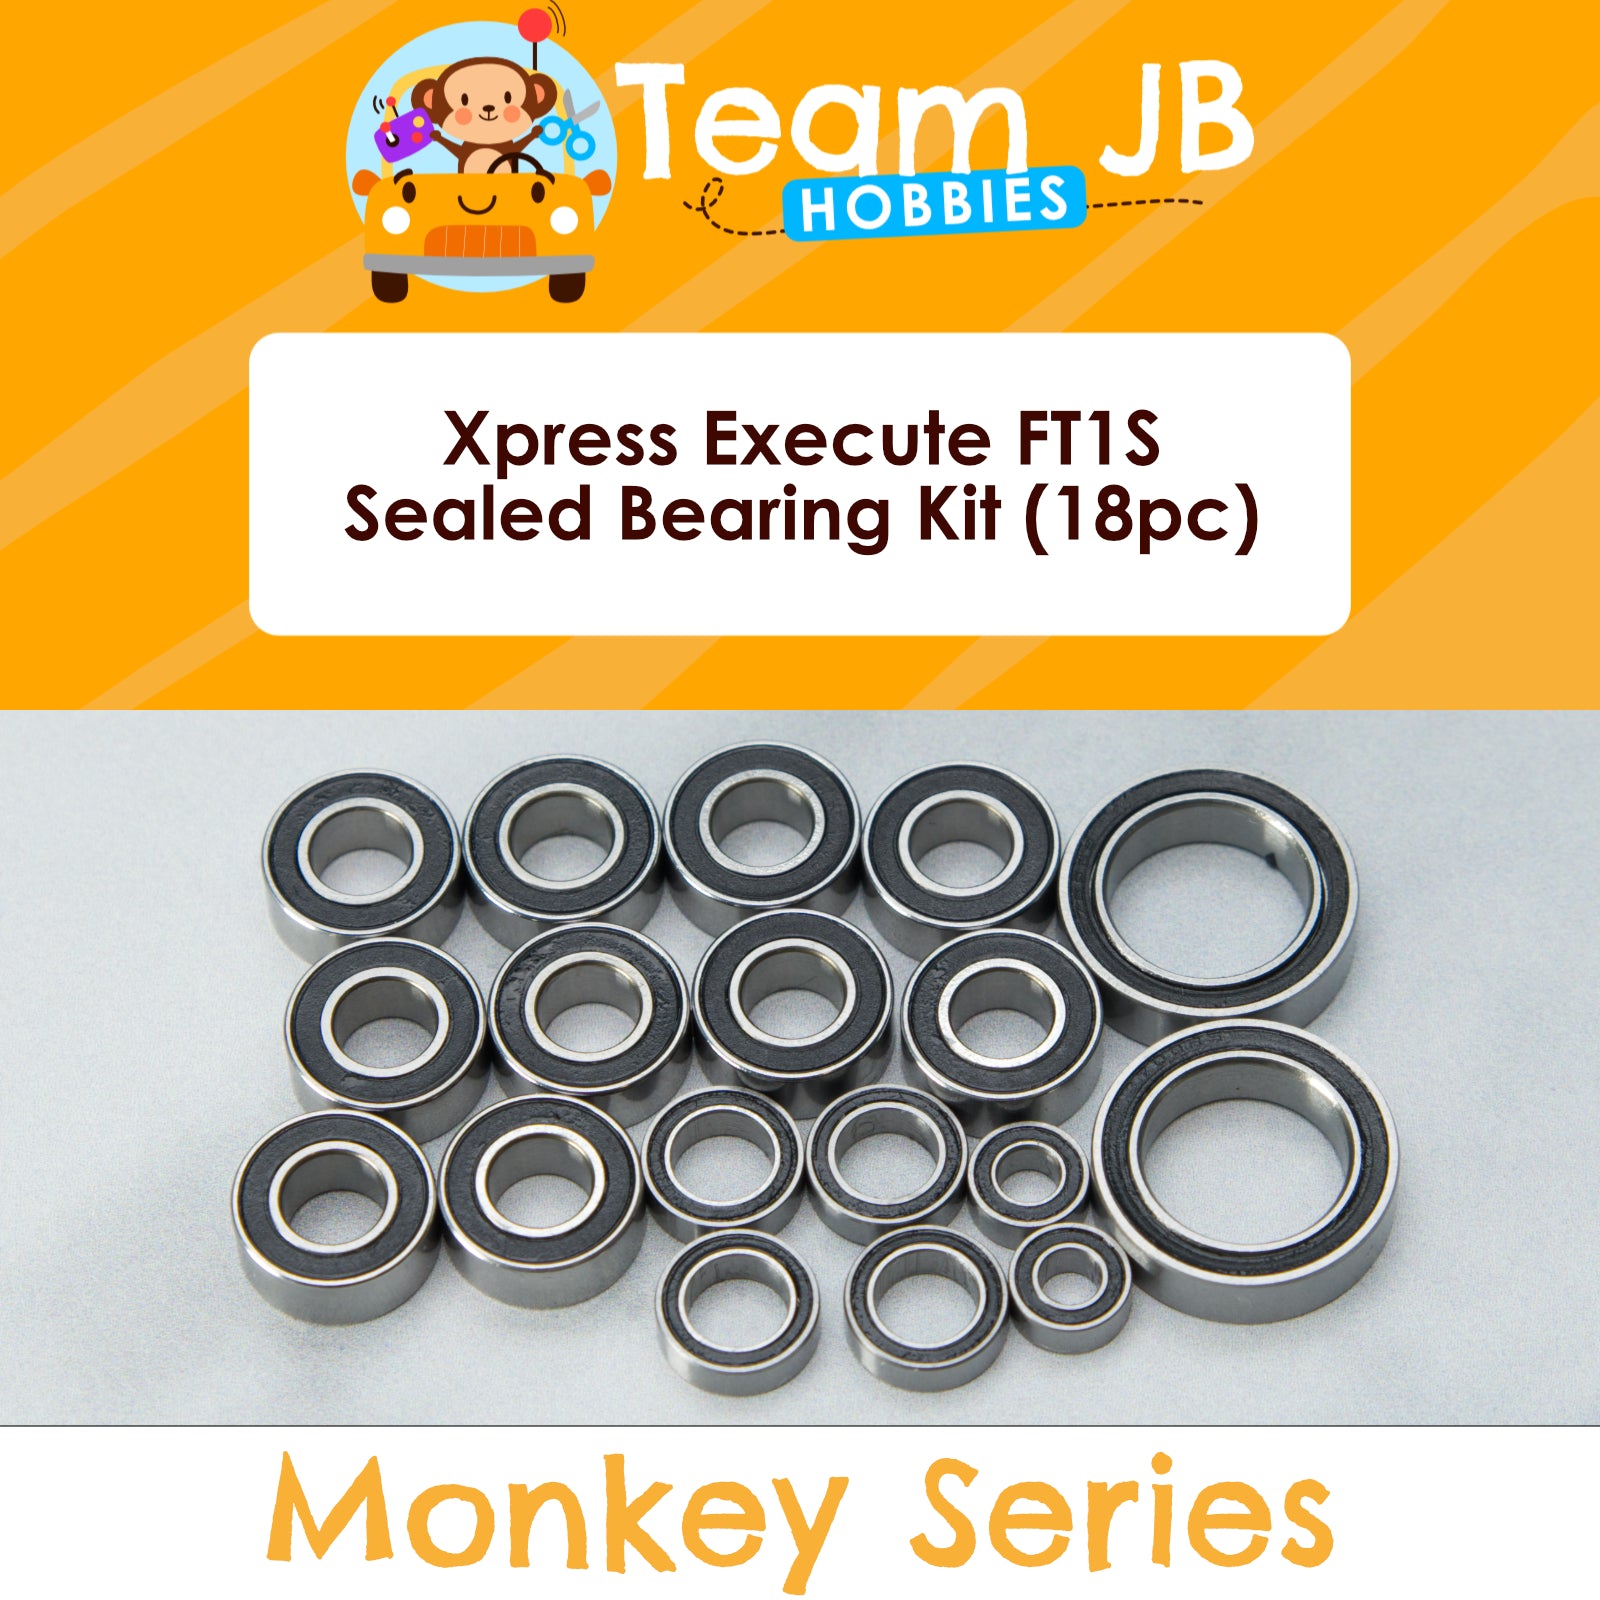 Xpress Execute FT1S - Sealed Bearing Kit